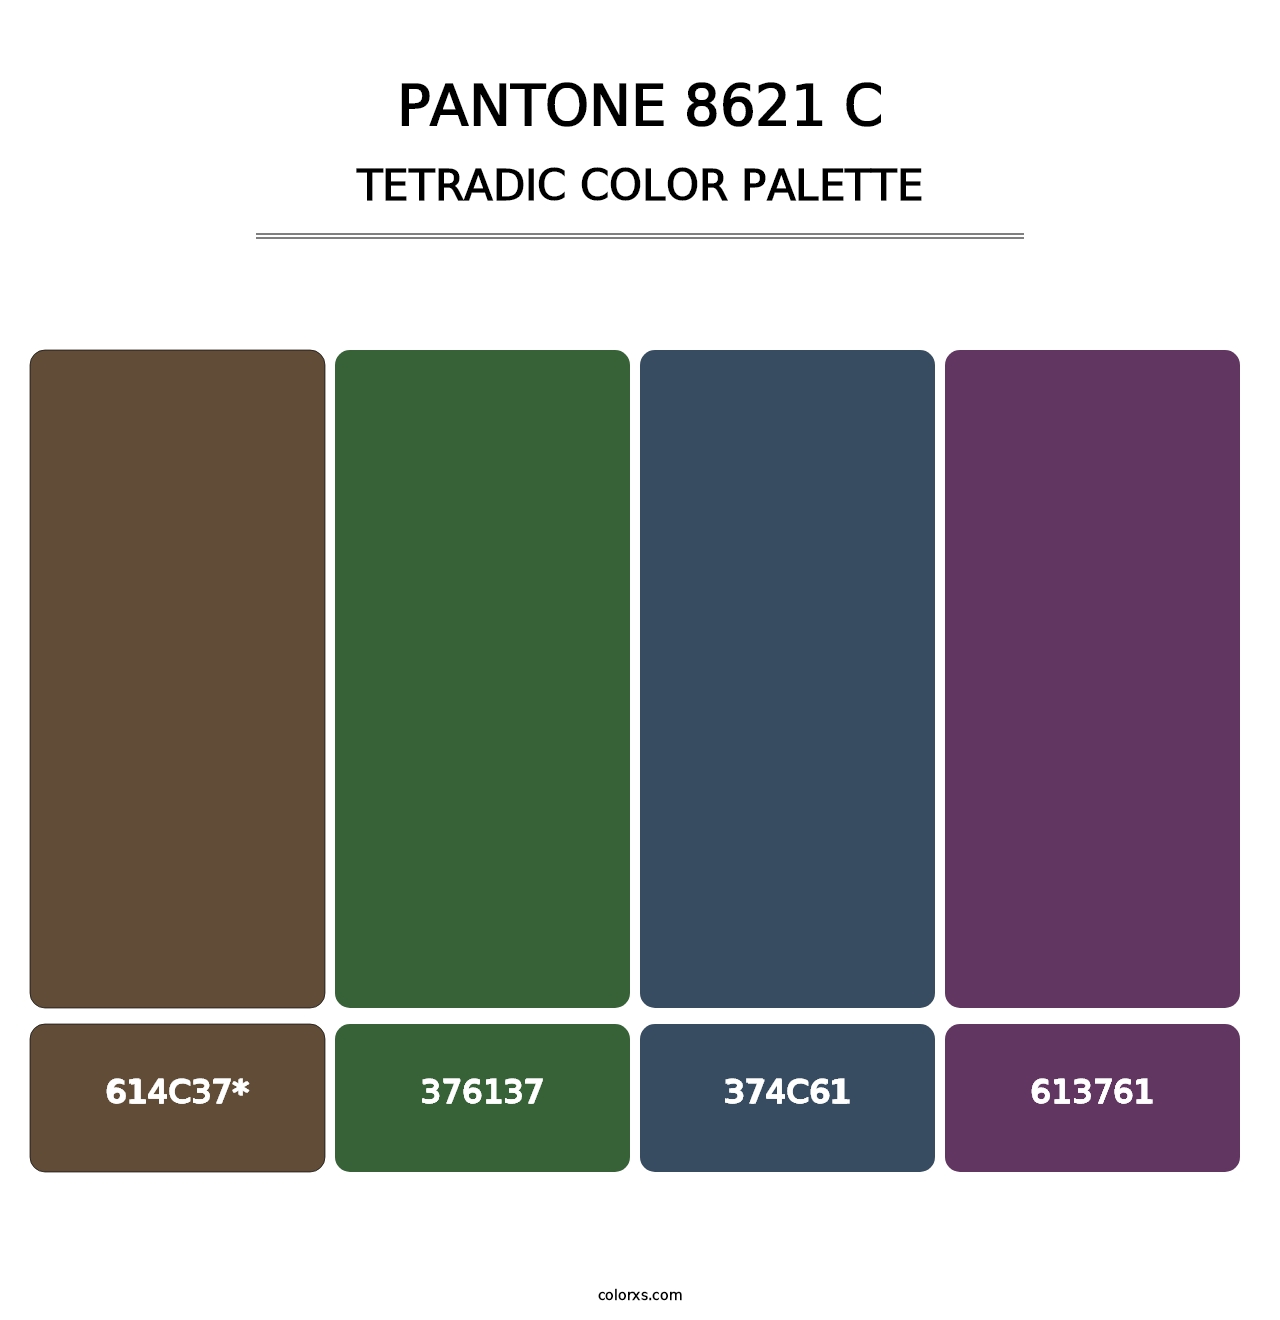 PANTONE 8621 C - Tetradic Color Palette